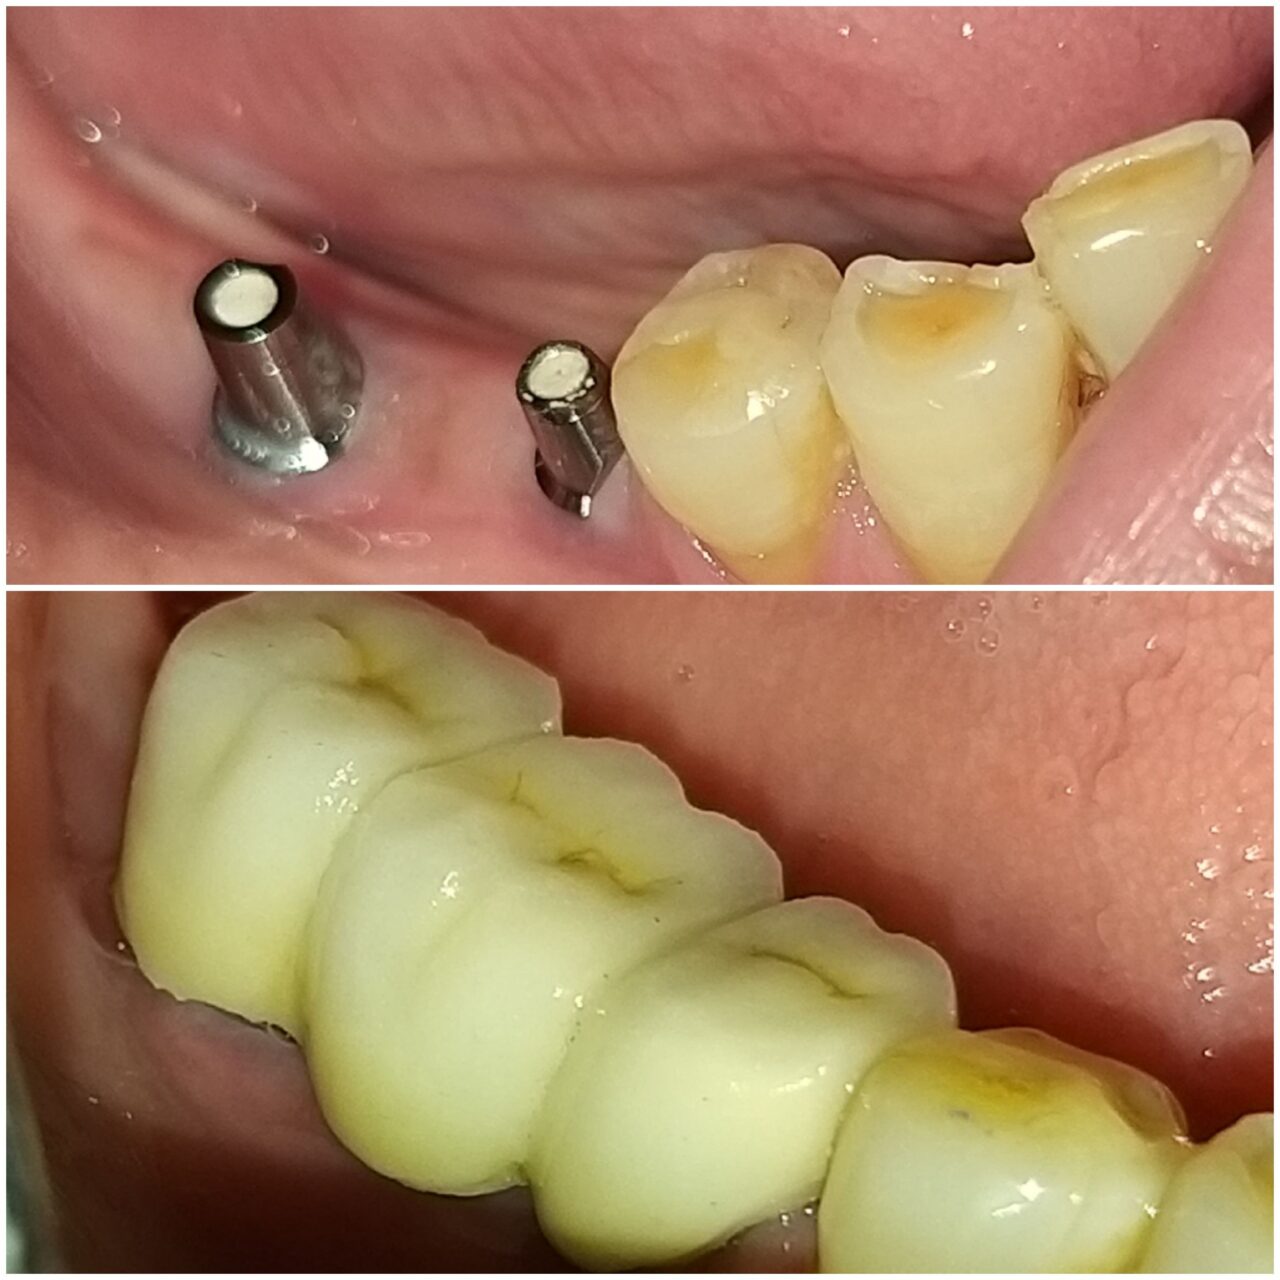 toothreplacementwithsingleimplant - 2